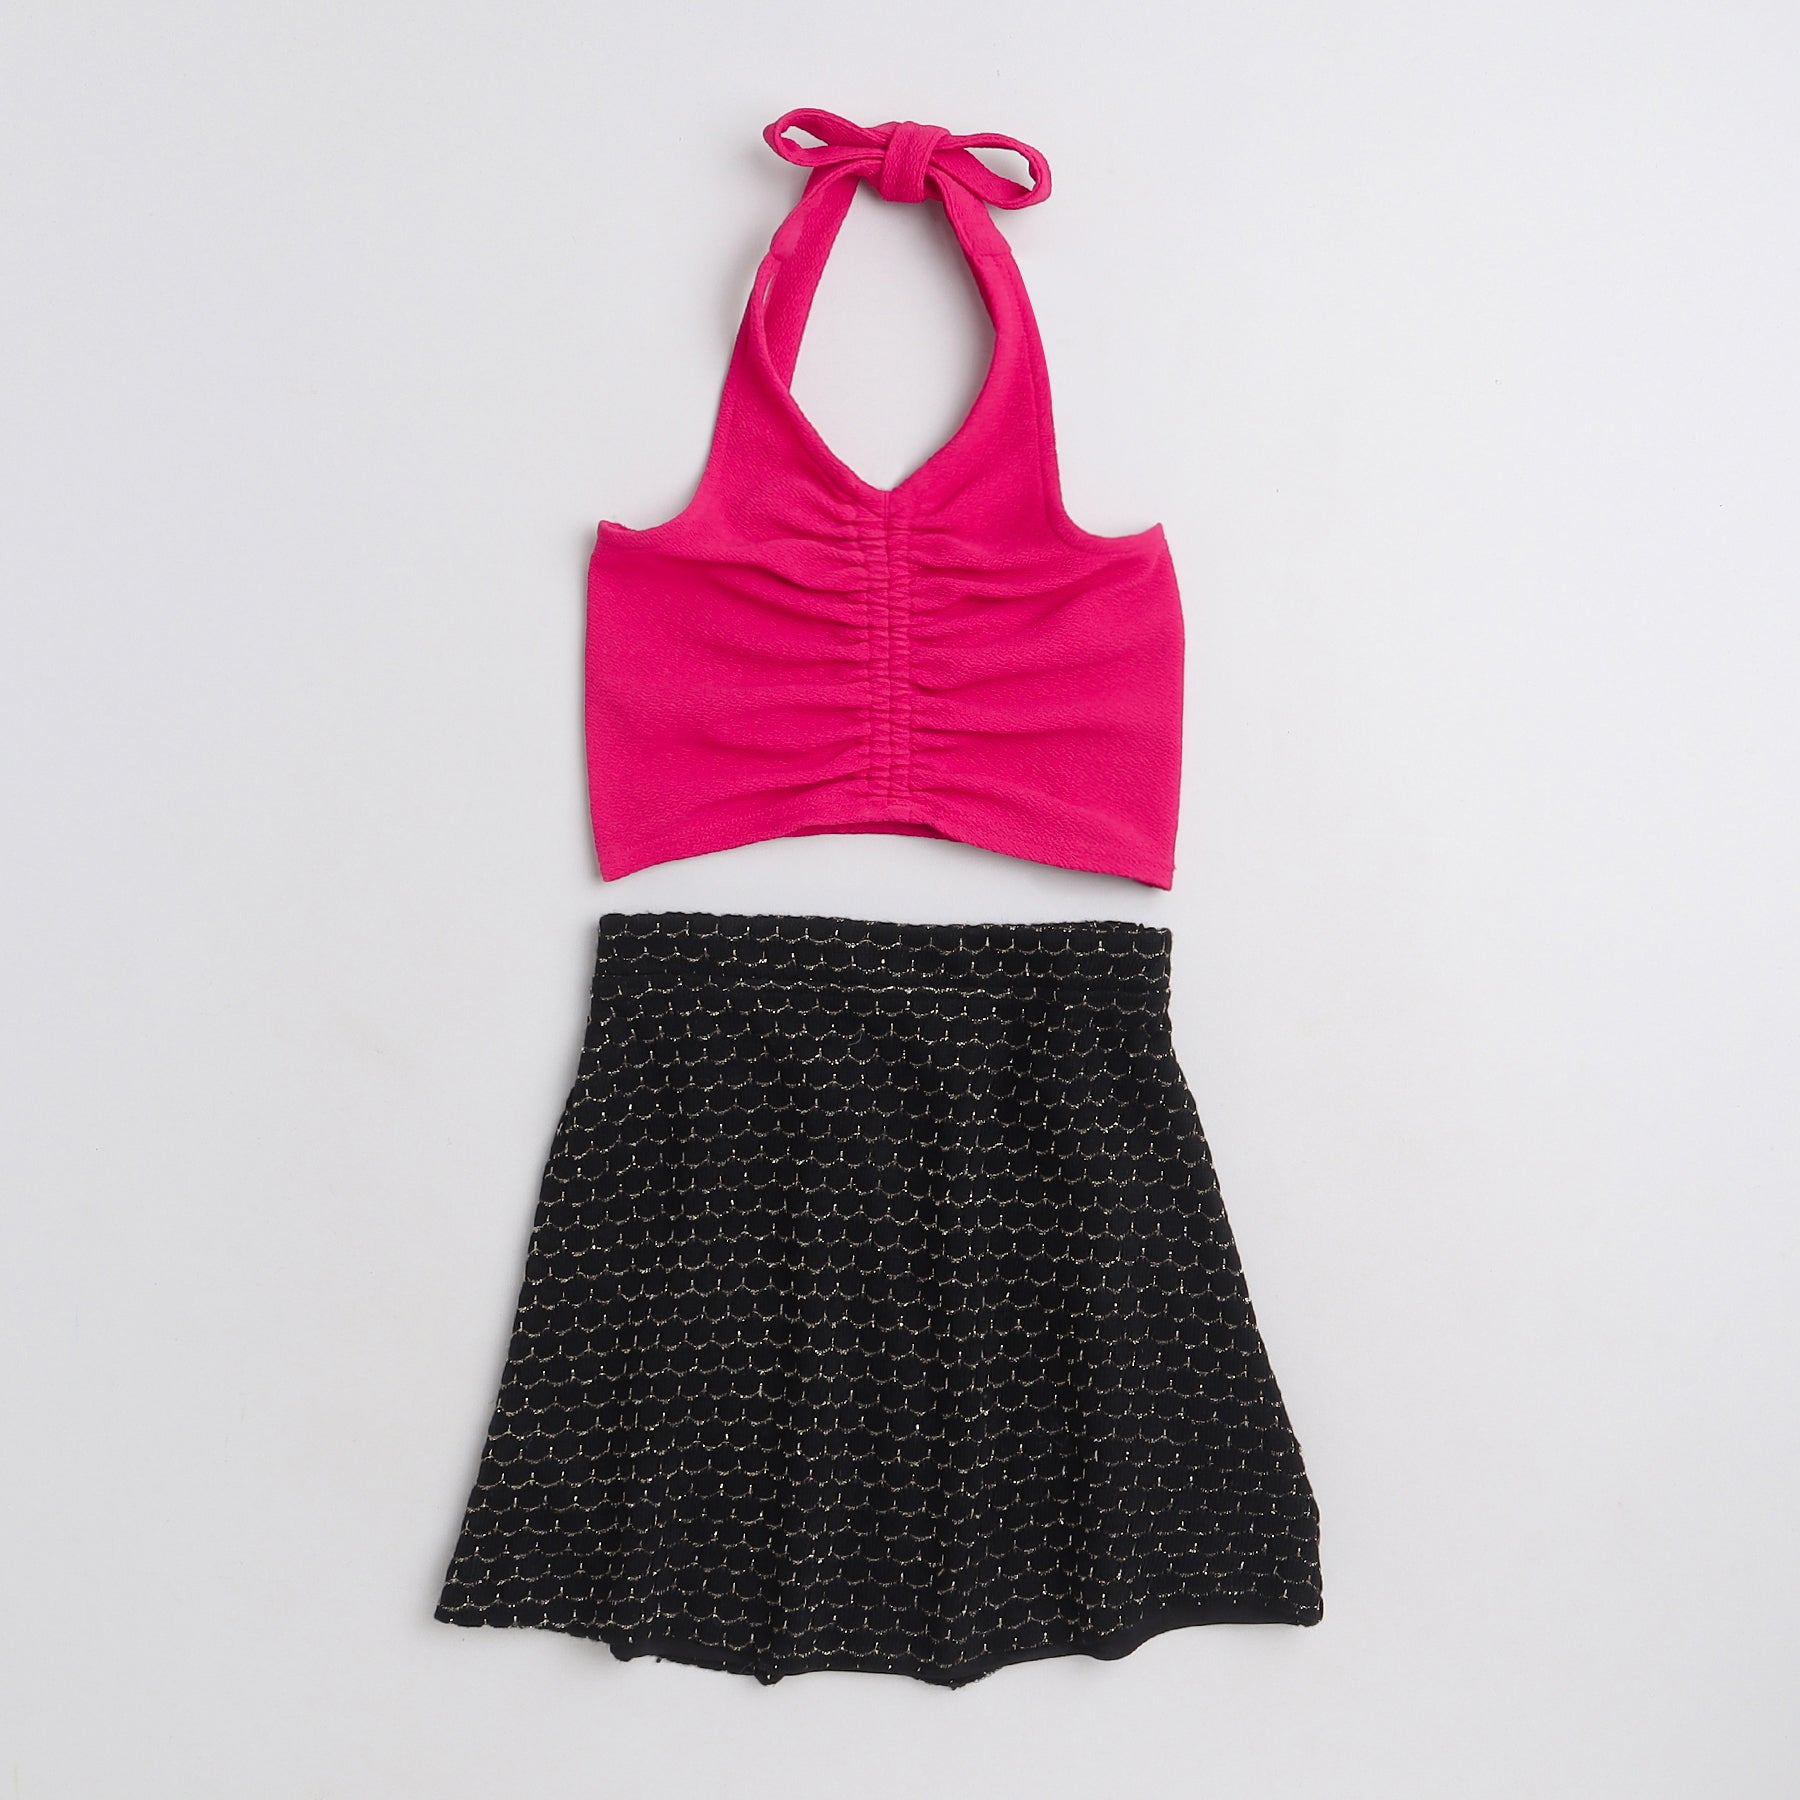 Taffykids solid halter neck rushed crop top and skirt set - Pink/Black